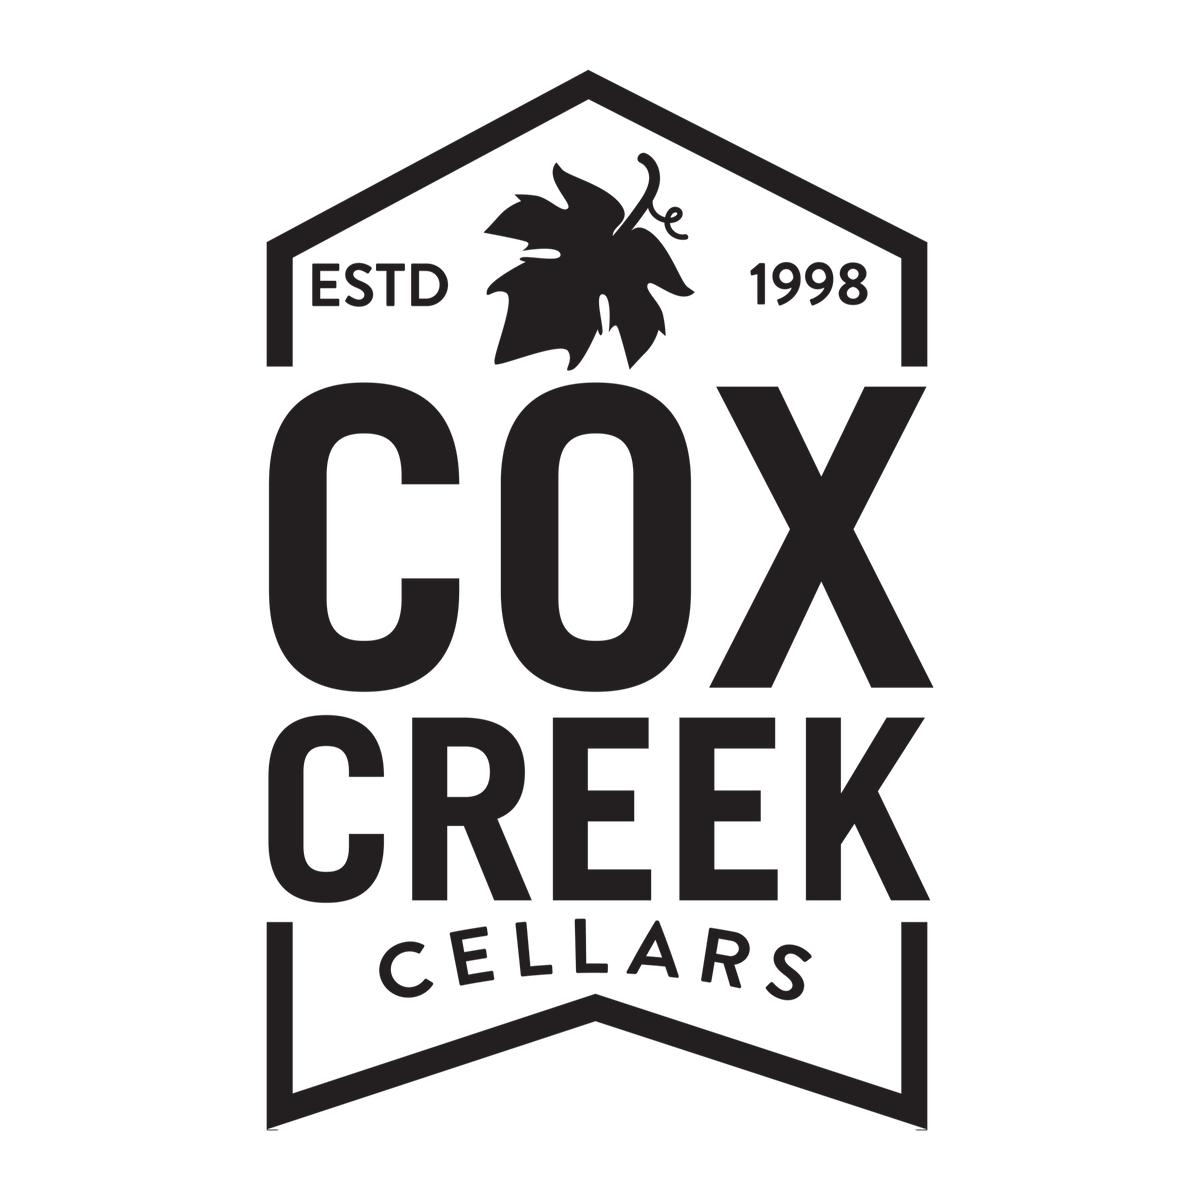 Cox Creek Cellars Gift Card